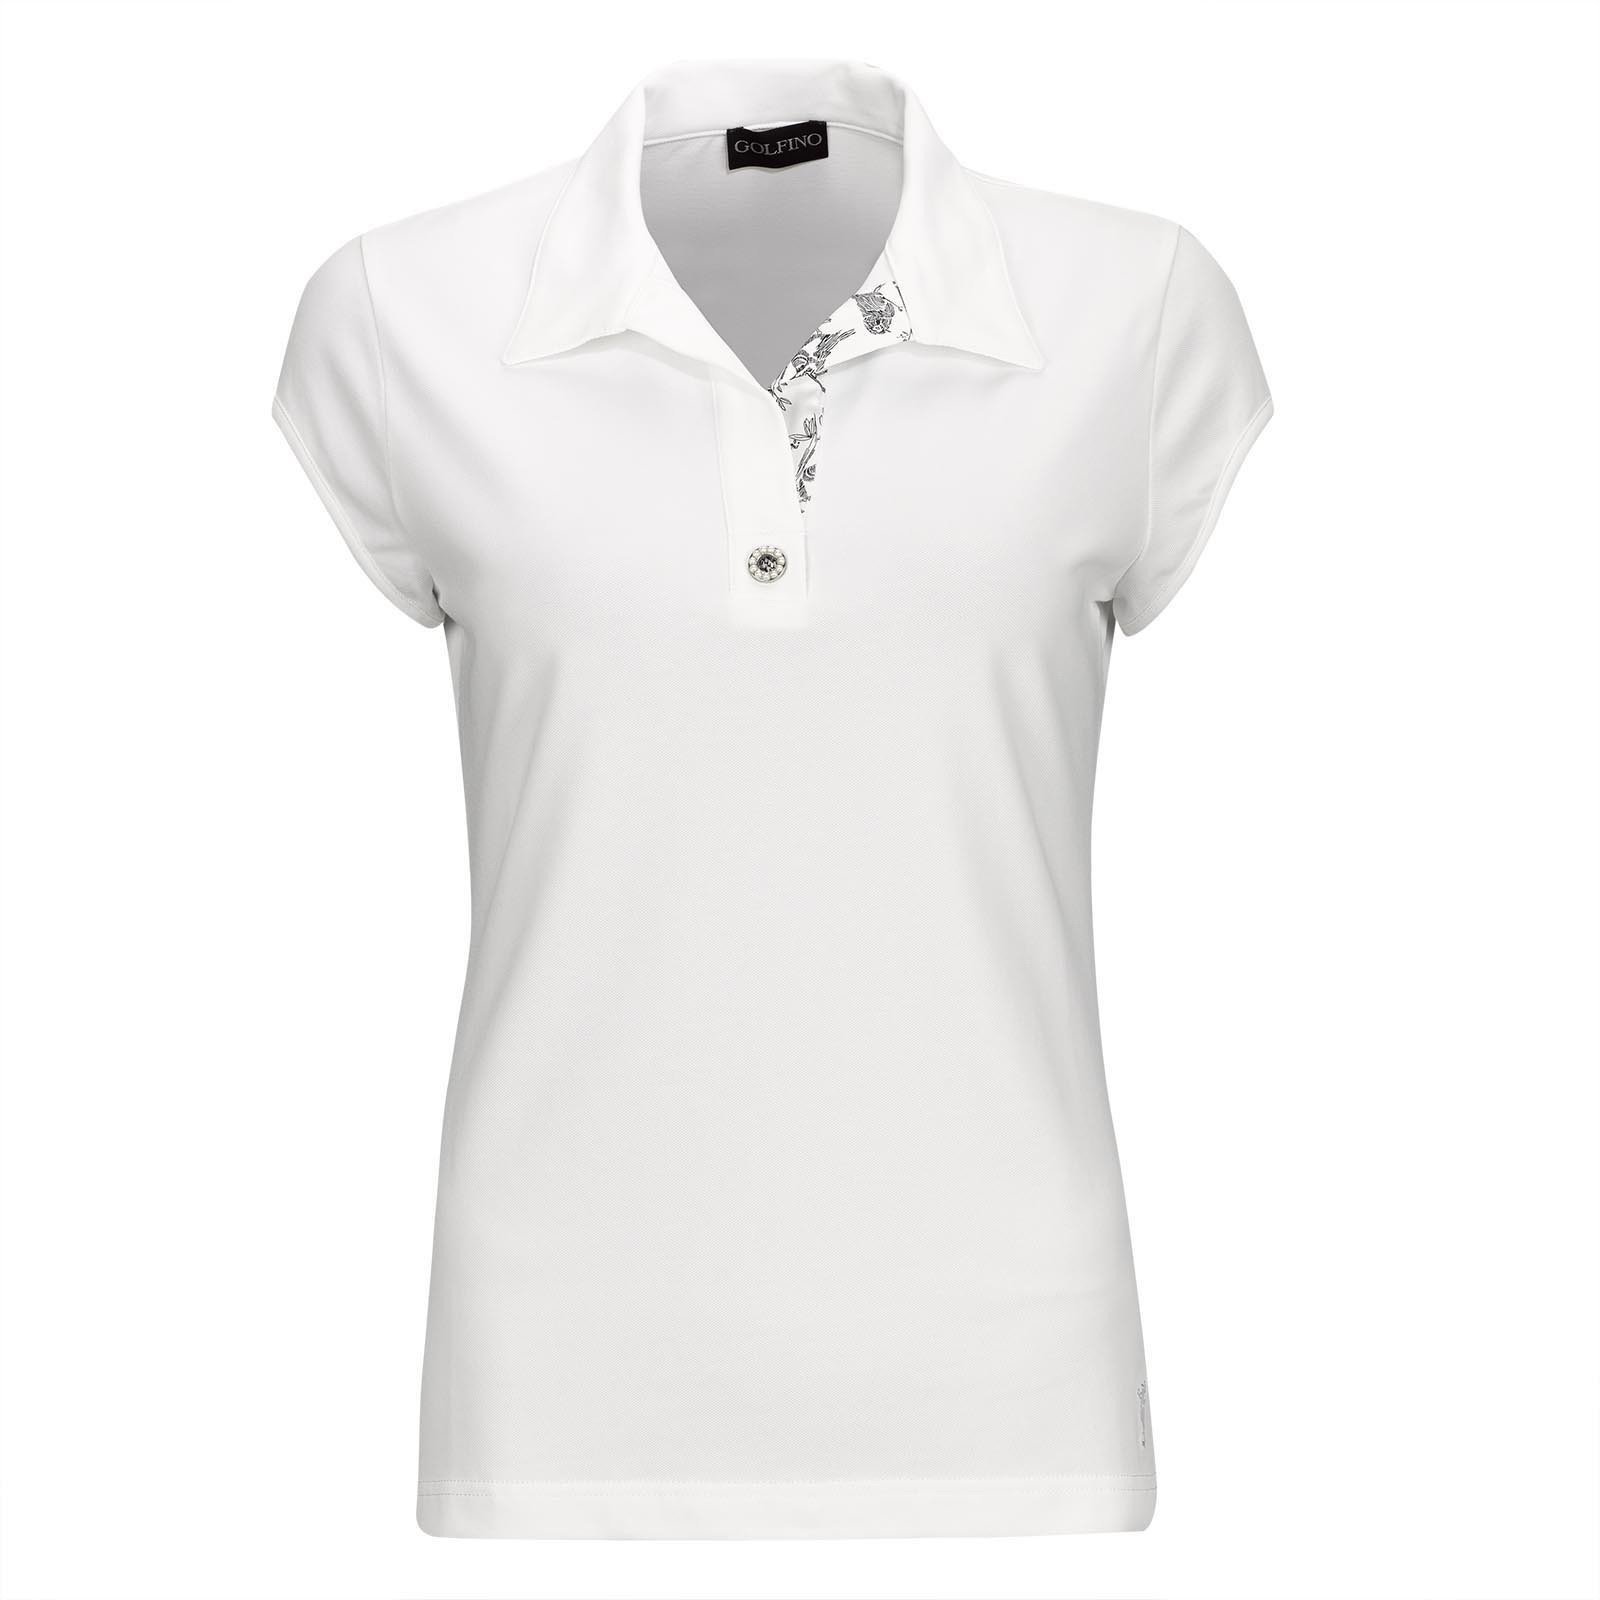 Poolopaita Golfino Pearls Cap Sleeve Womens Polo Shirt White 38